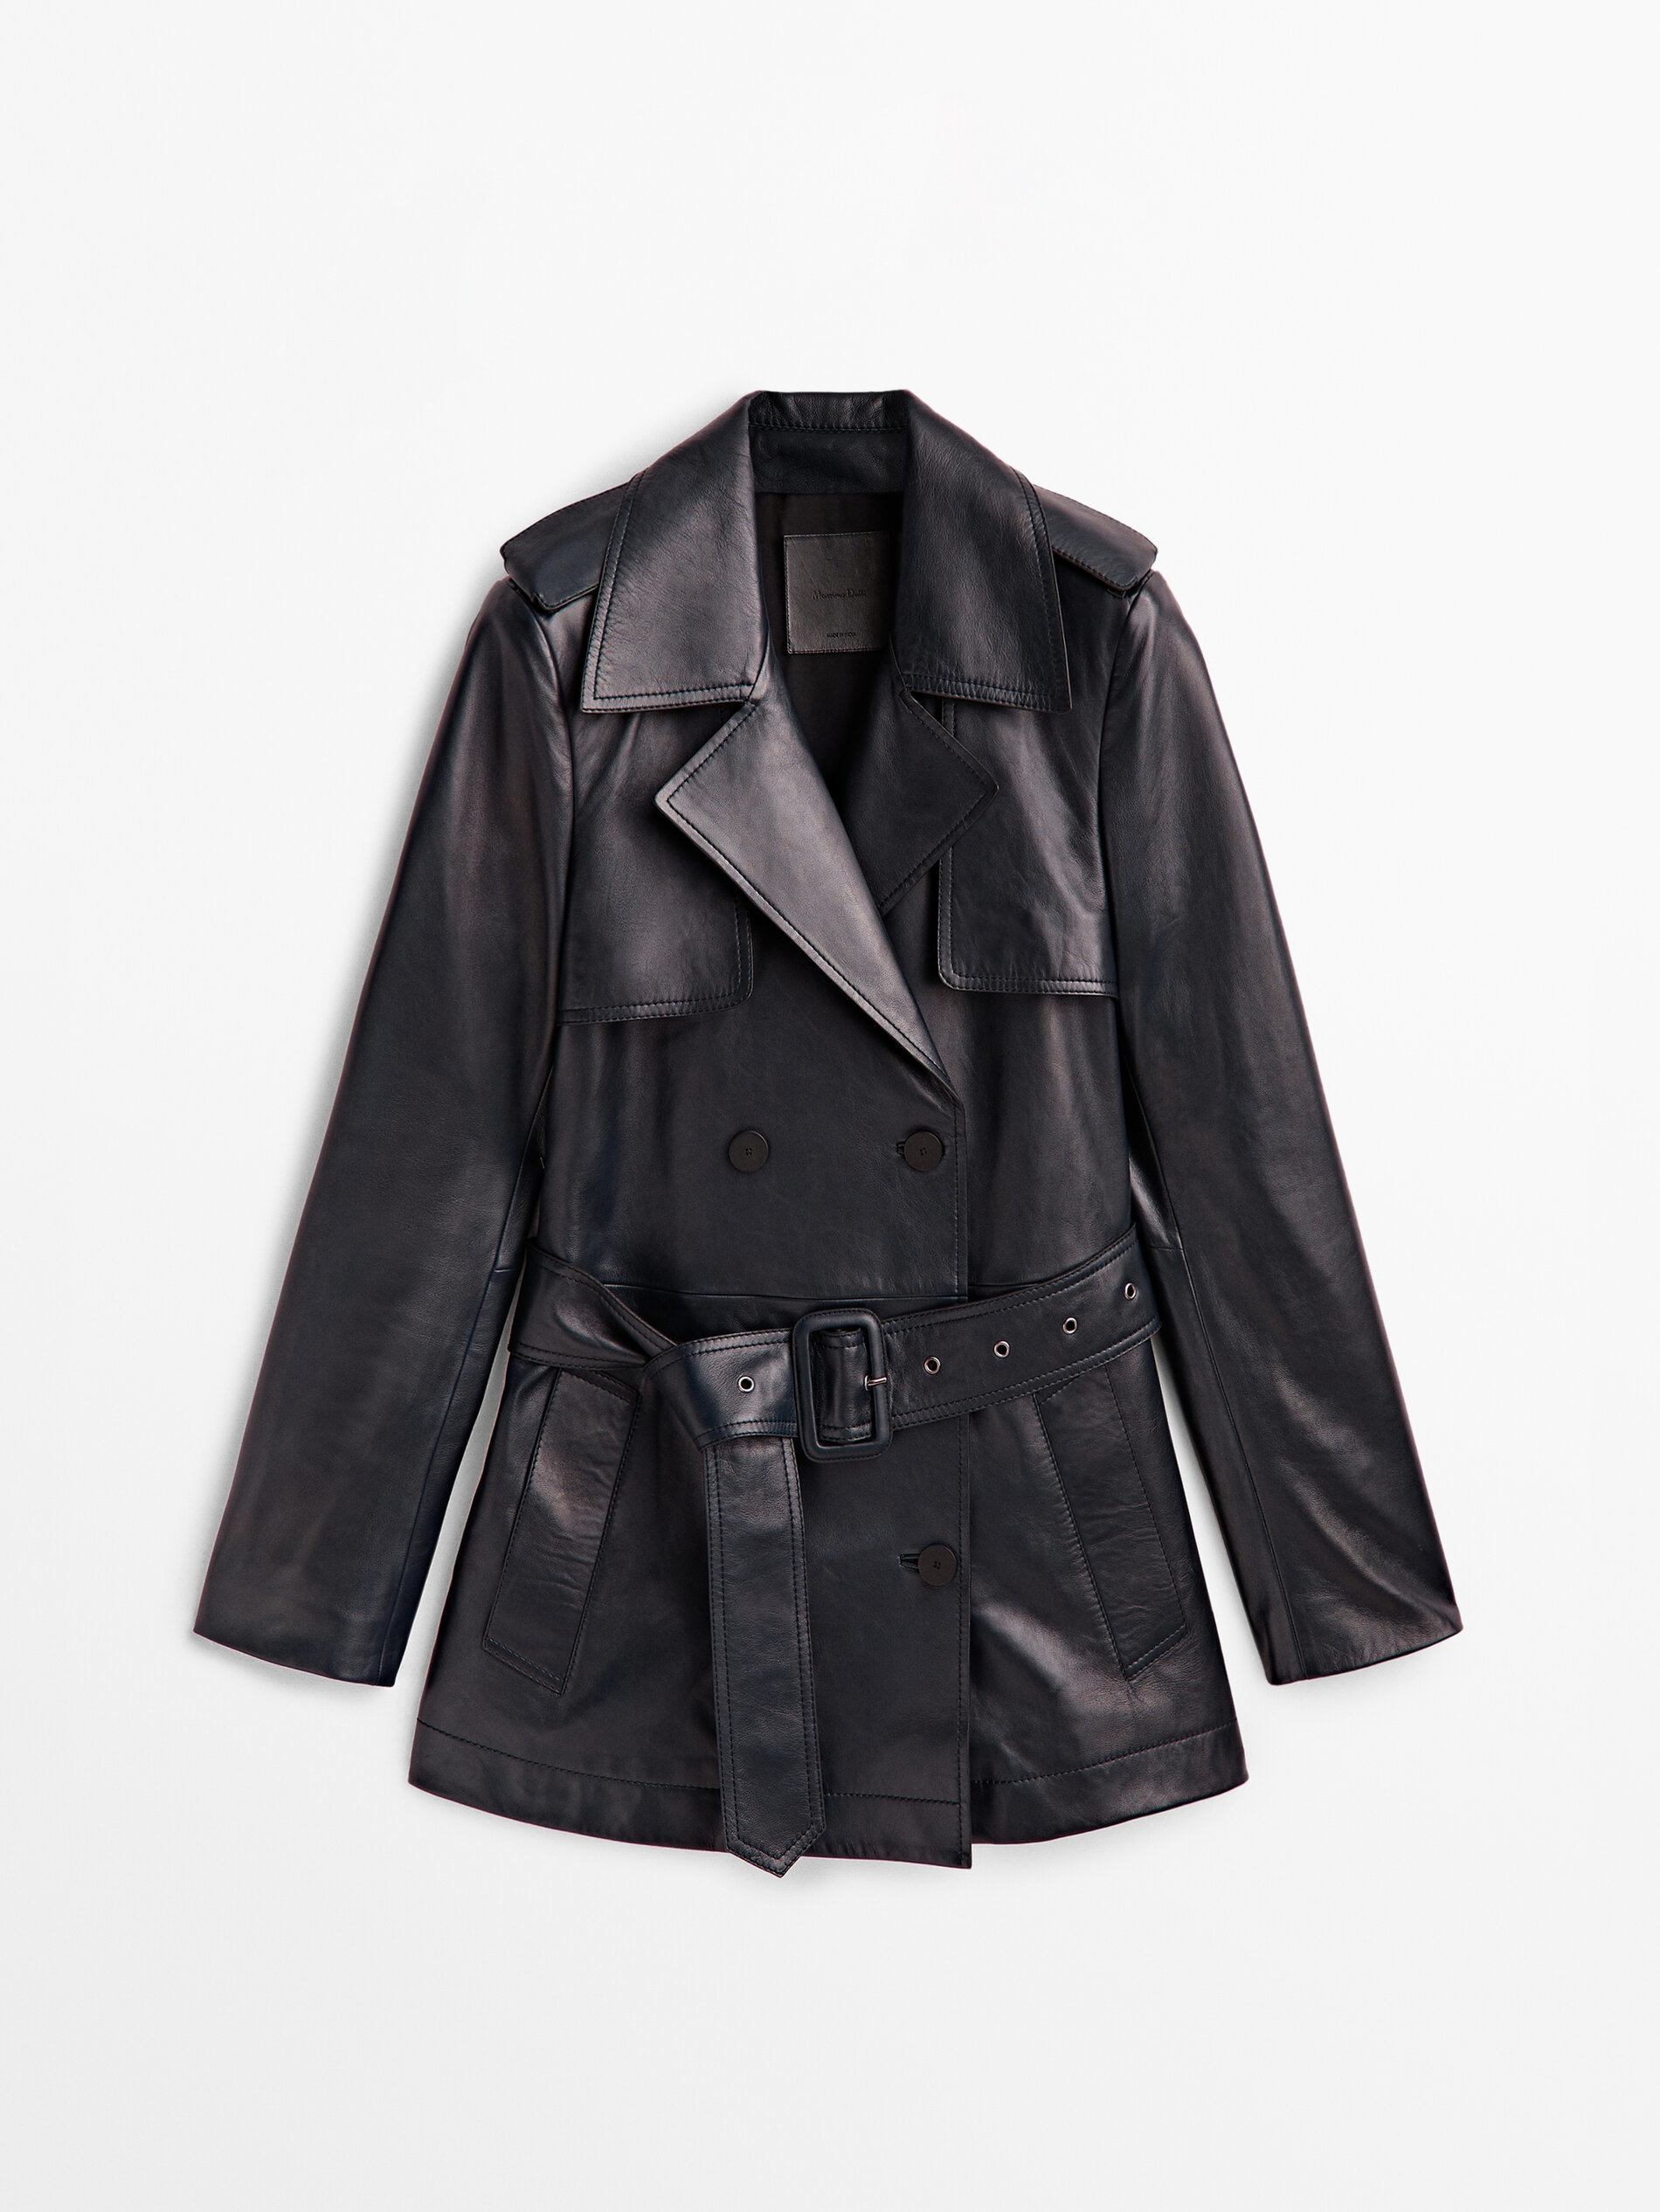 Massimo Dutti leather trench jacket (299 euros).